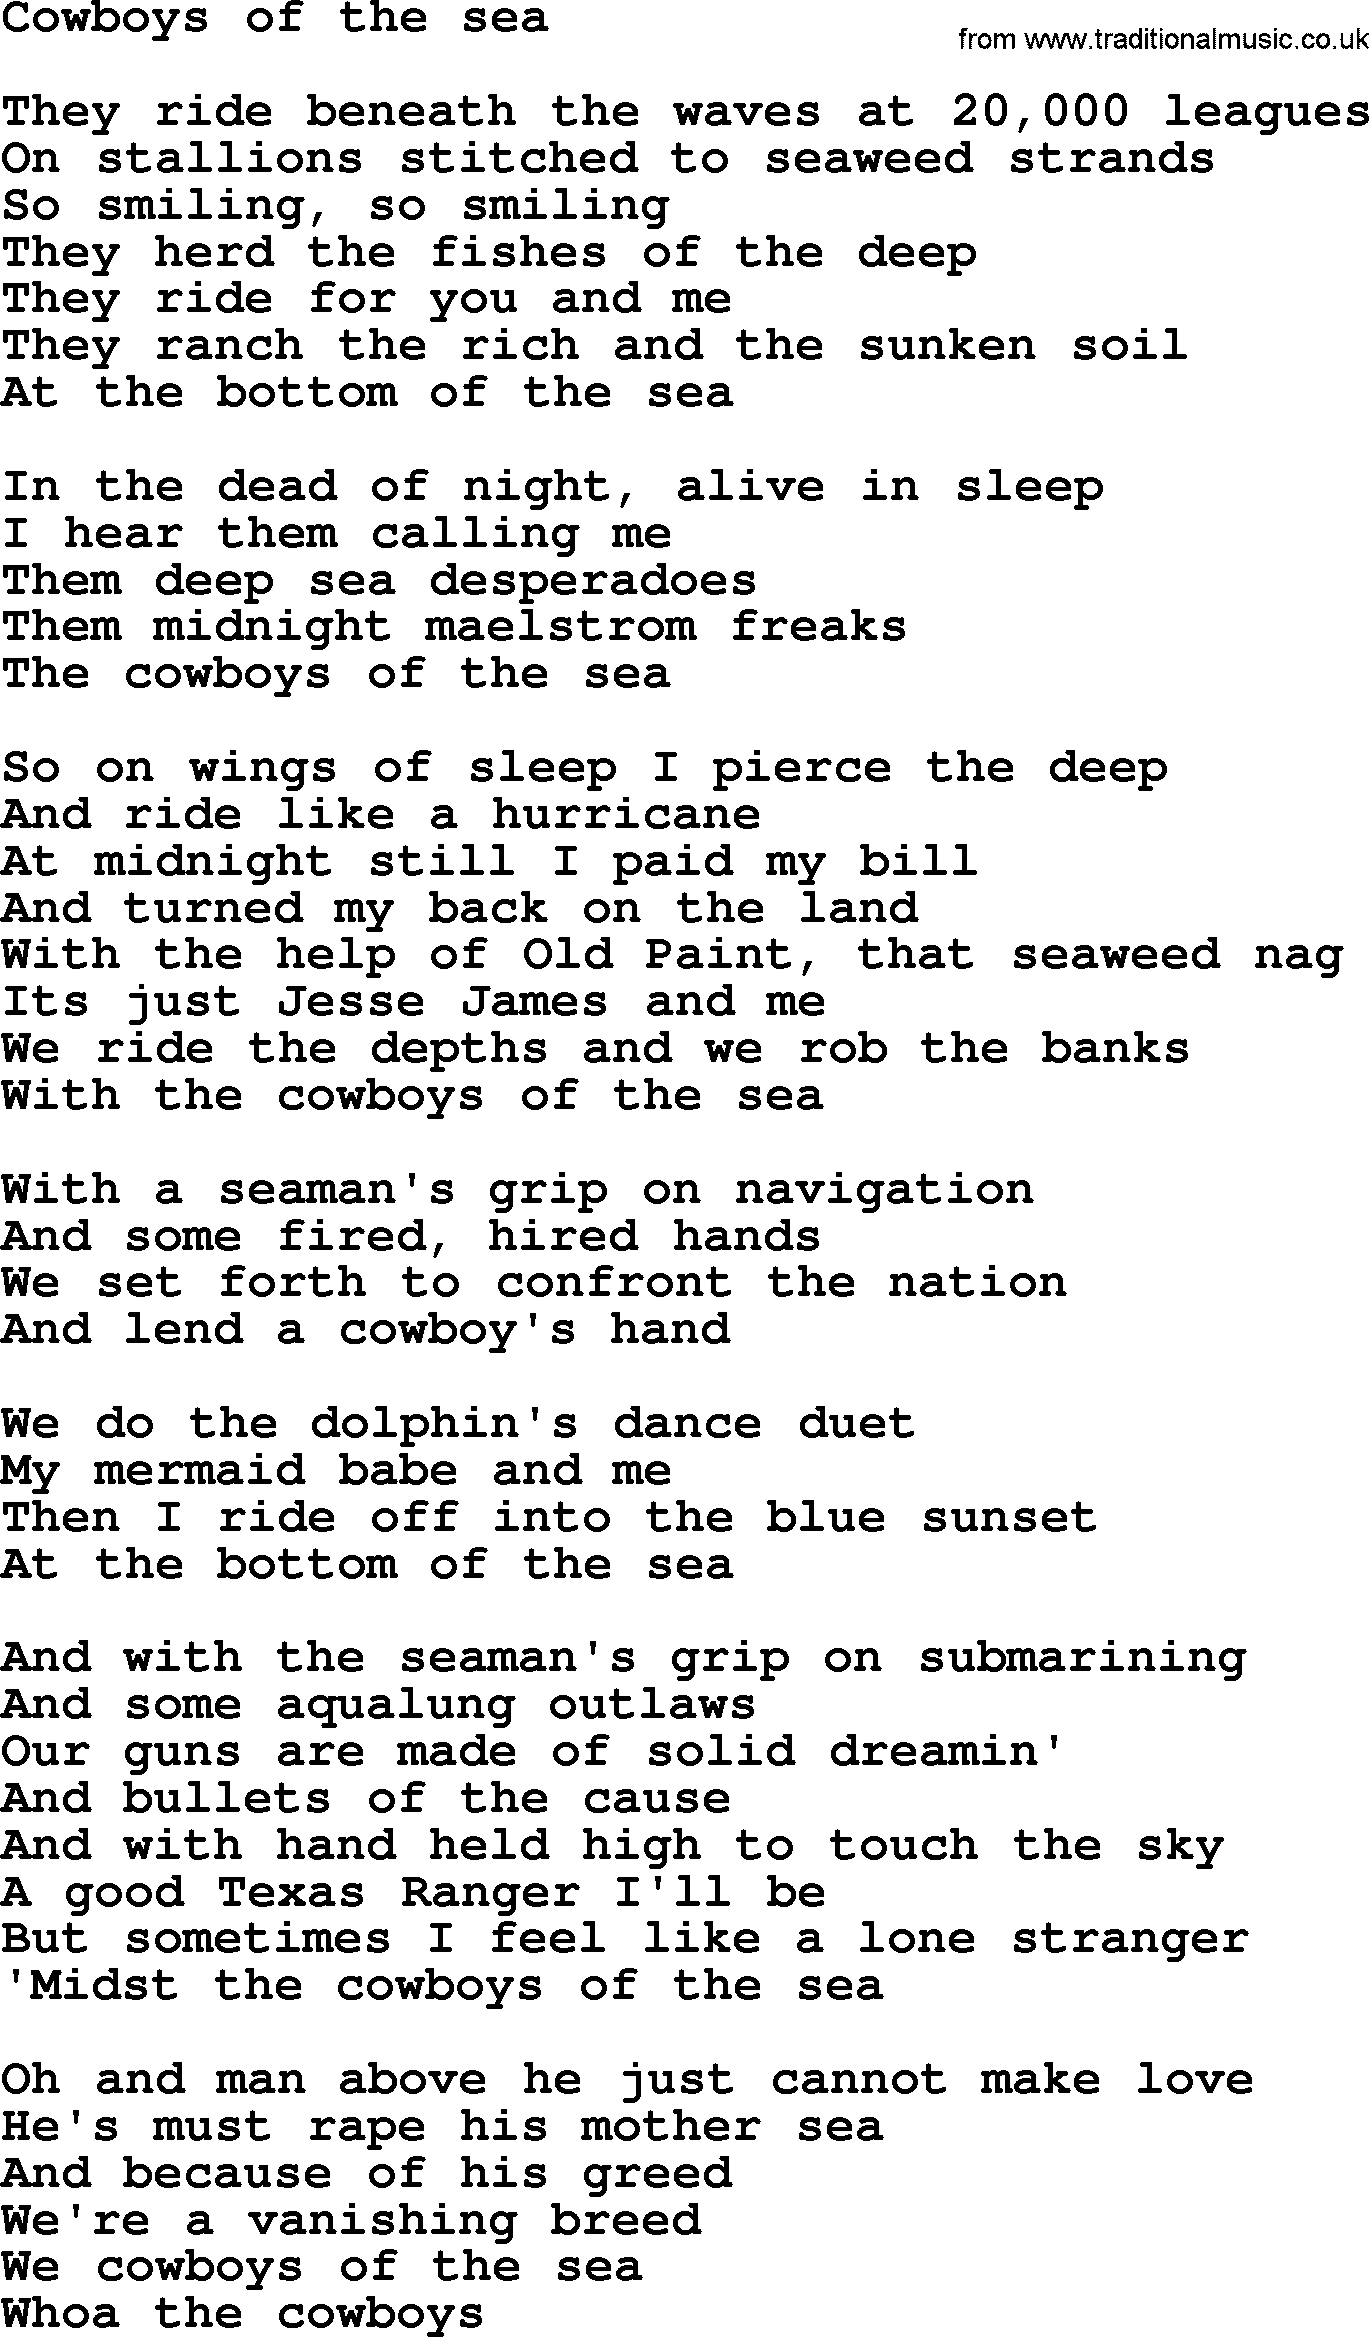 Bruce Springsteen song: Cowboys Of The Sea lyrics